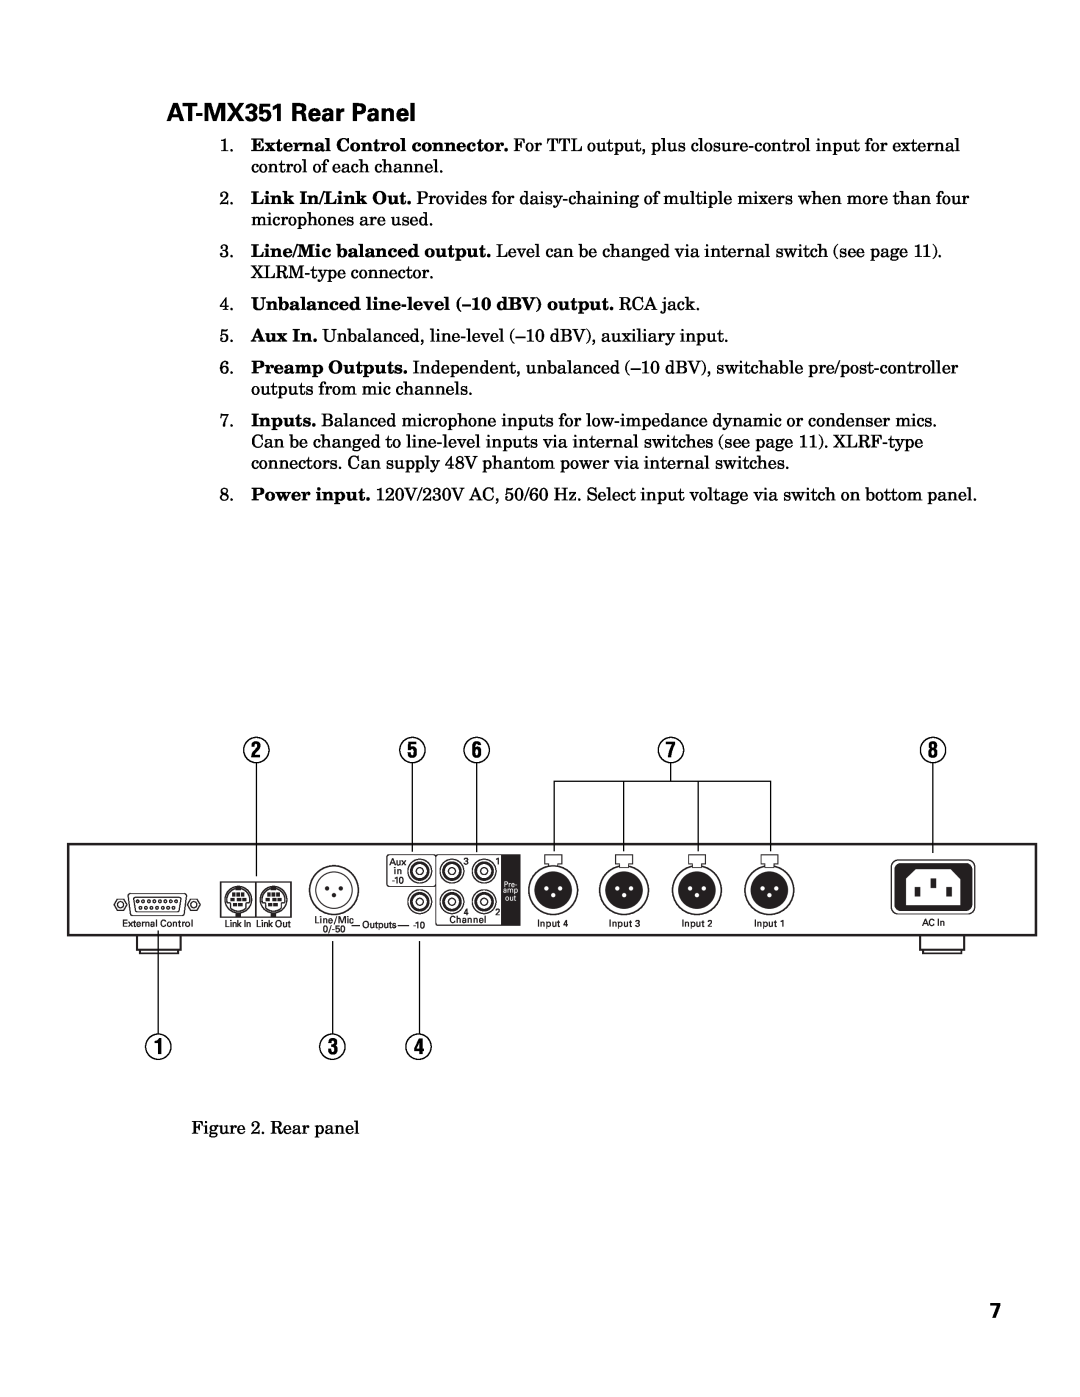 Audio-Technica manual AT-MX351 Rear Panel, Unbalanced line-level -10 dBV output. RCA jack 